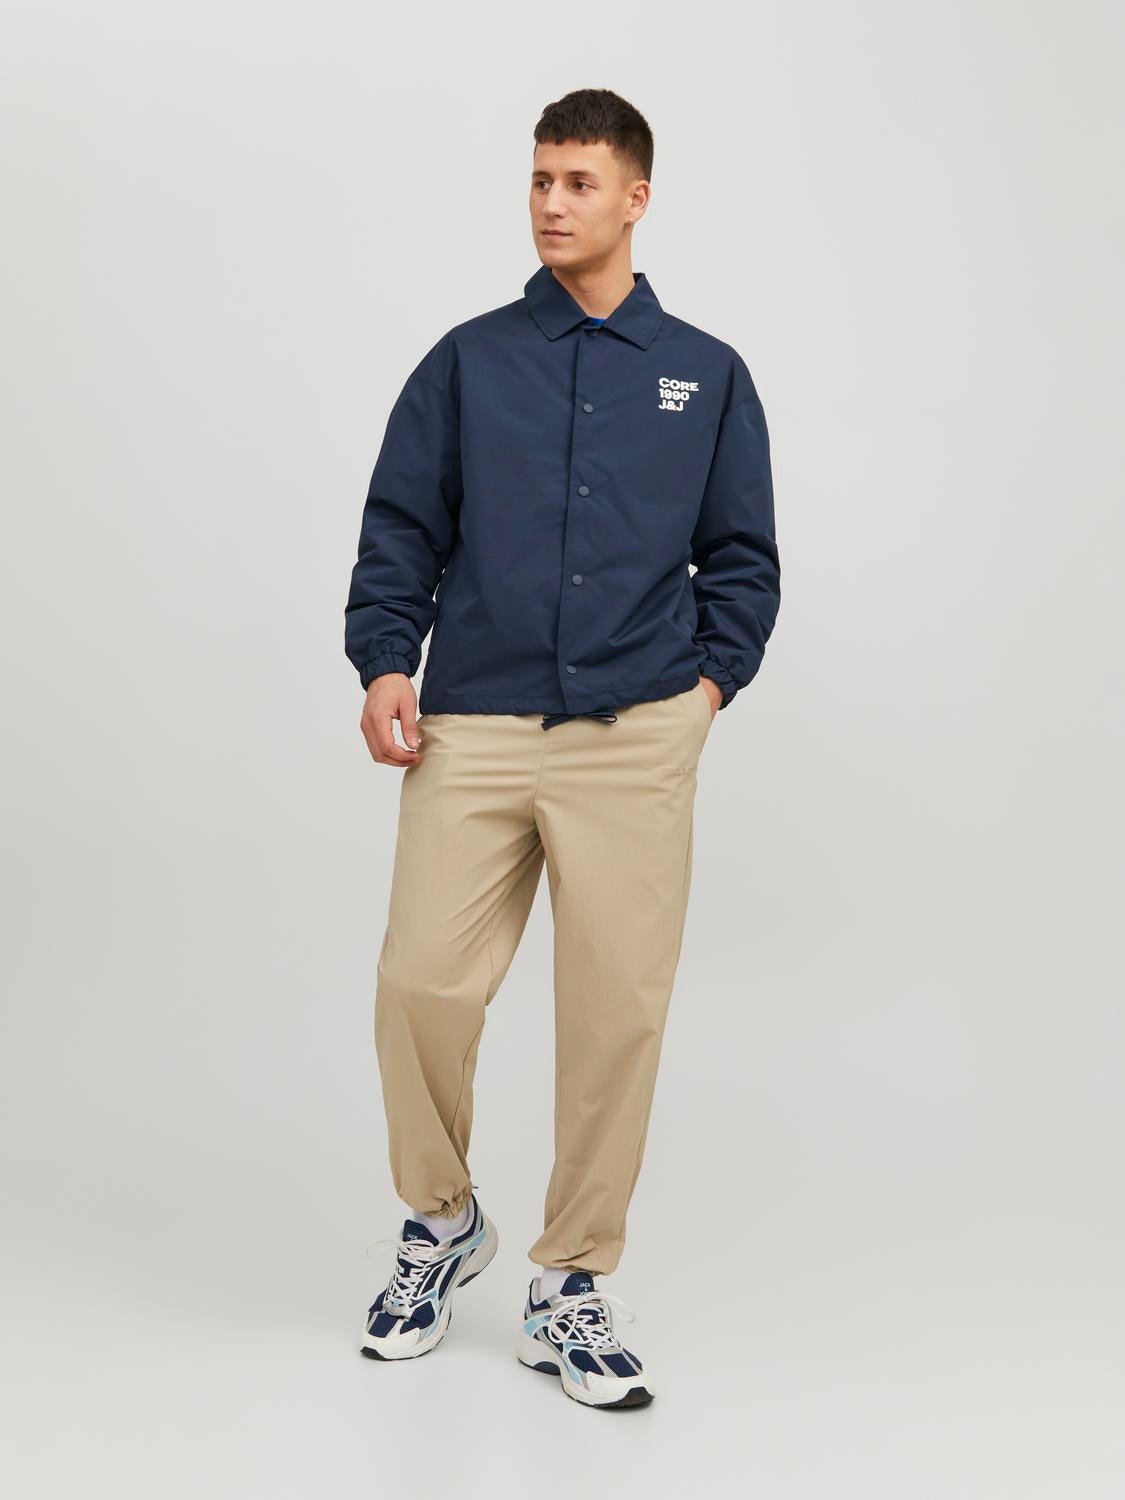 Jack & Jones Light jacket -Navy Blazer - 12234296